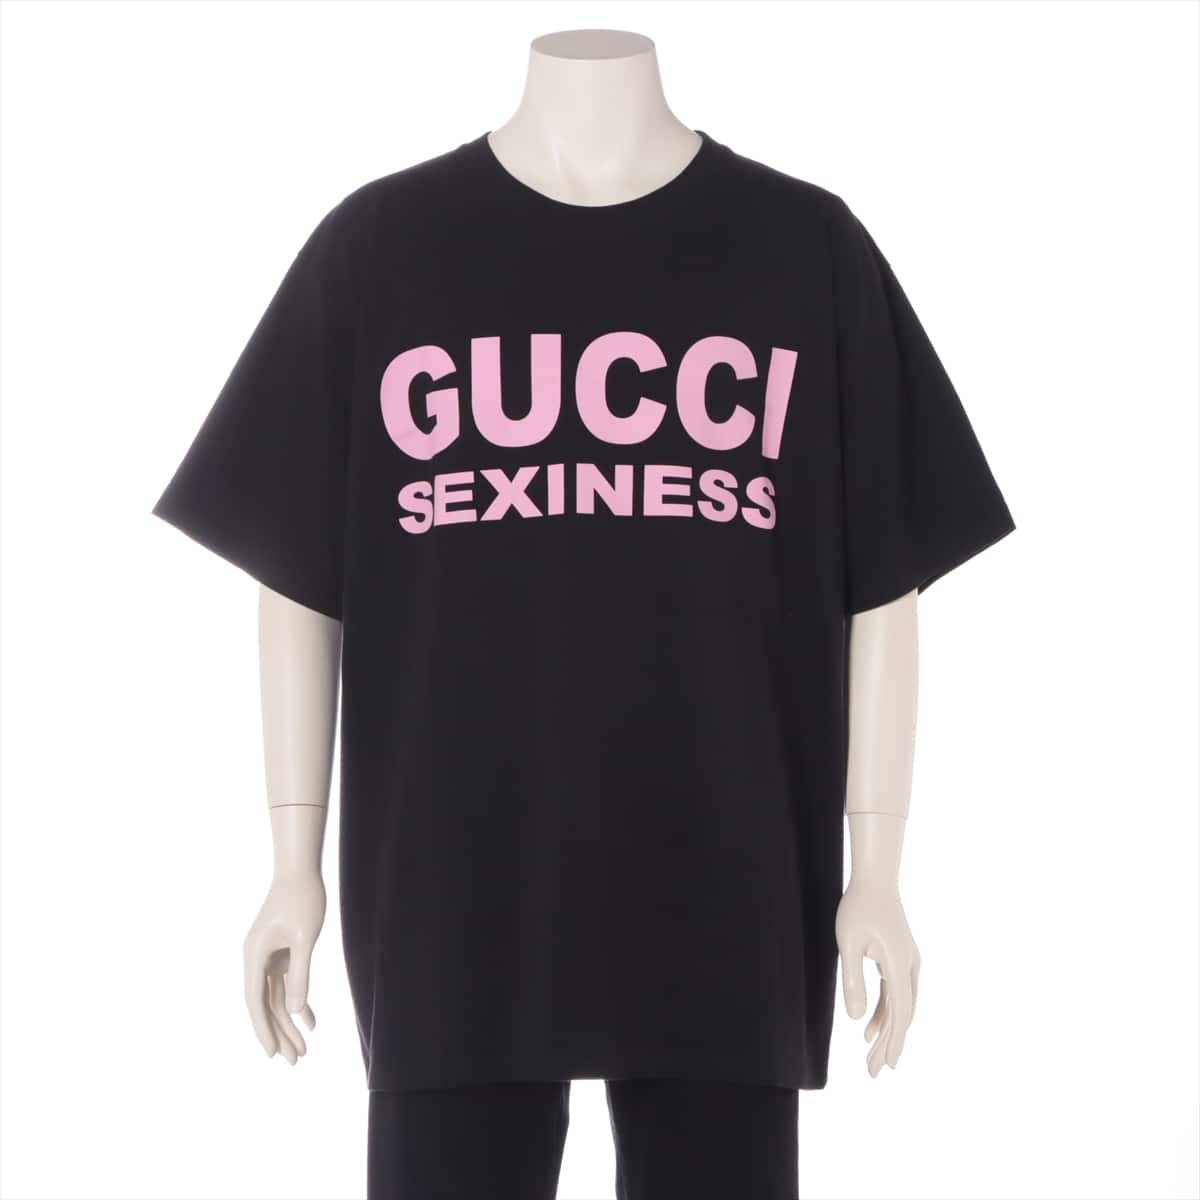 Gucci 20SS Cotton T-shirt XL Men's Black x pink  616036 GUCCI SEXINESS Oversized